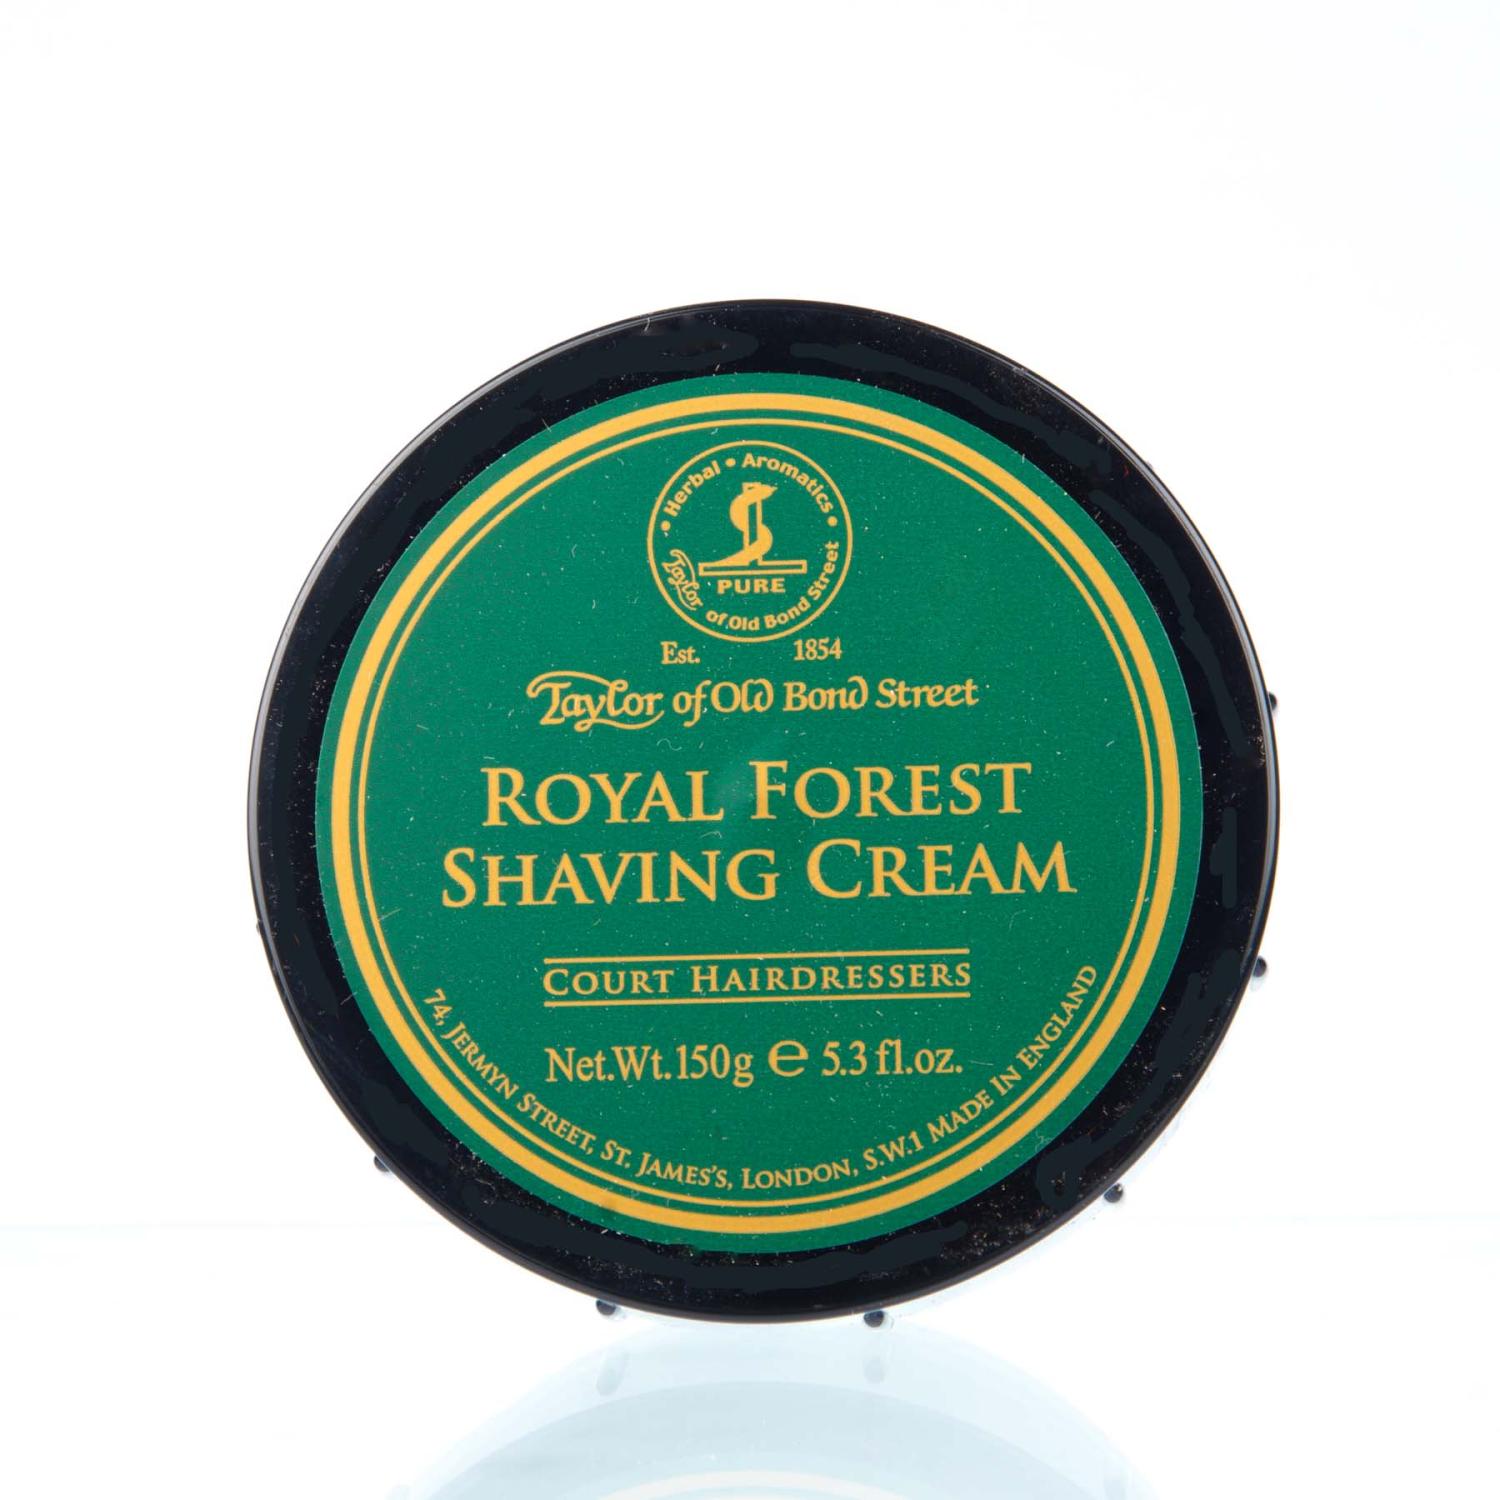 Rasiercreme Shaving Street Bond Taylor Royal Forest of Old Cream